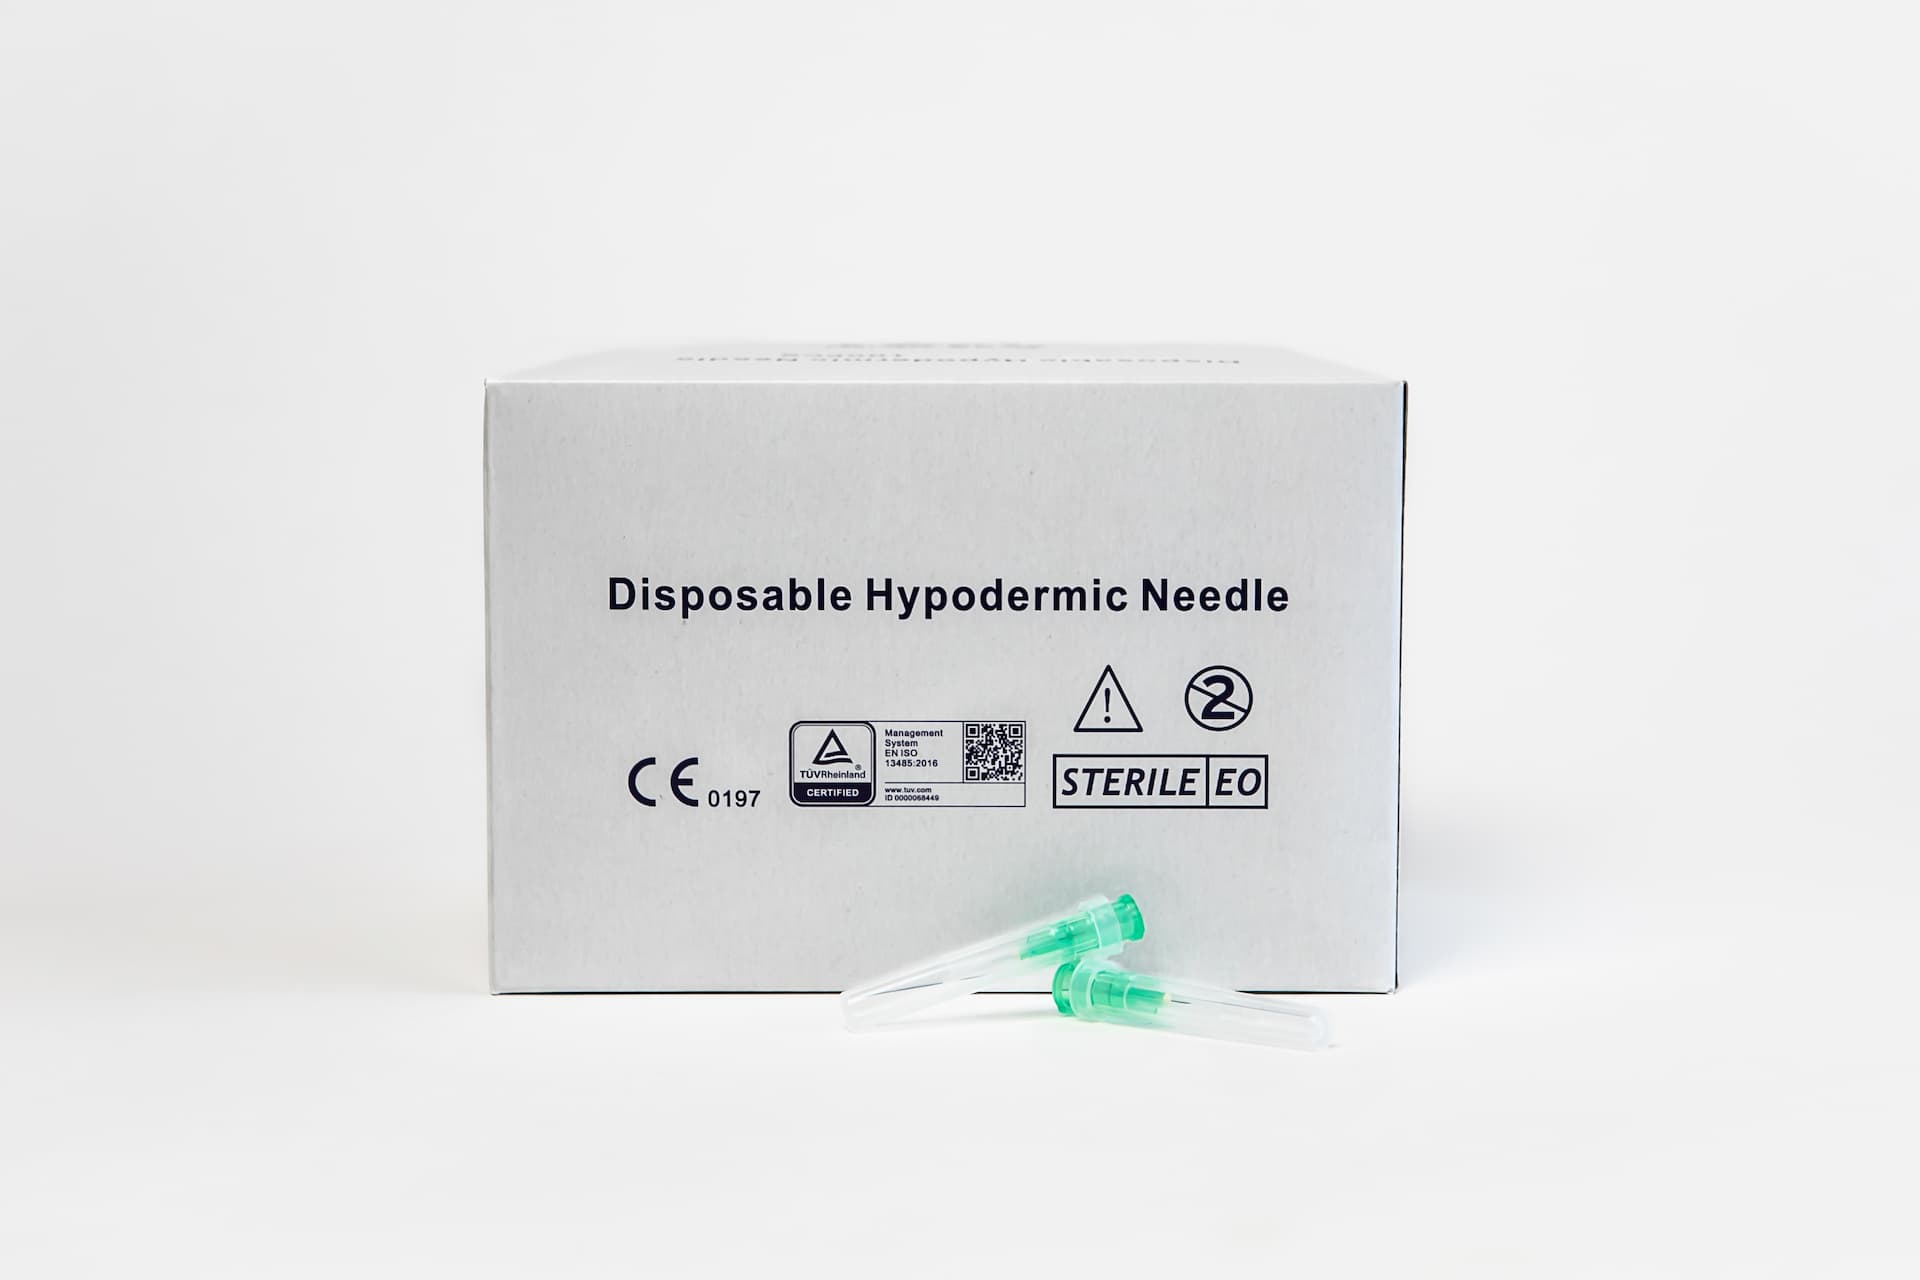 32 Gauge 13mm (0.5 inch) Hypodermic needles